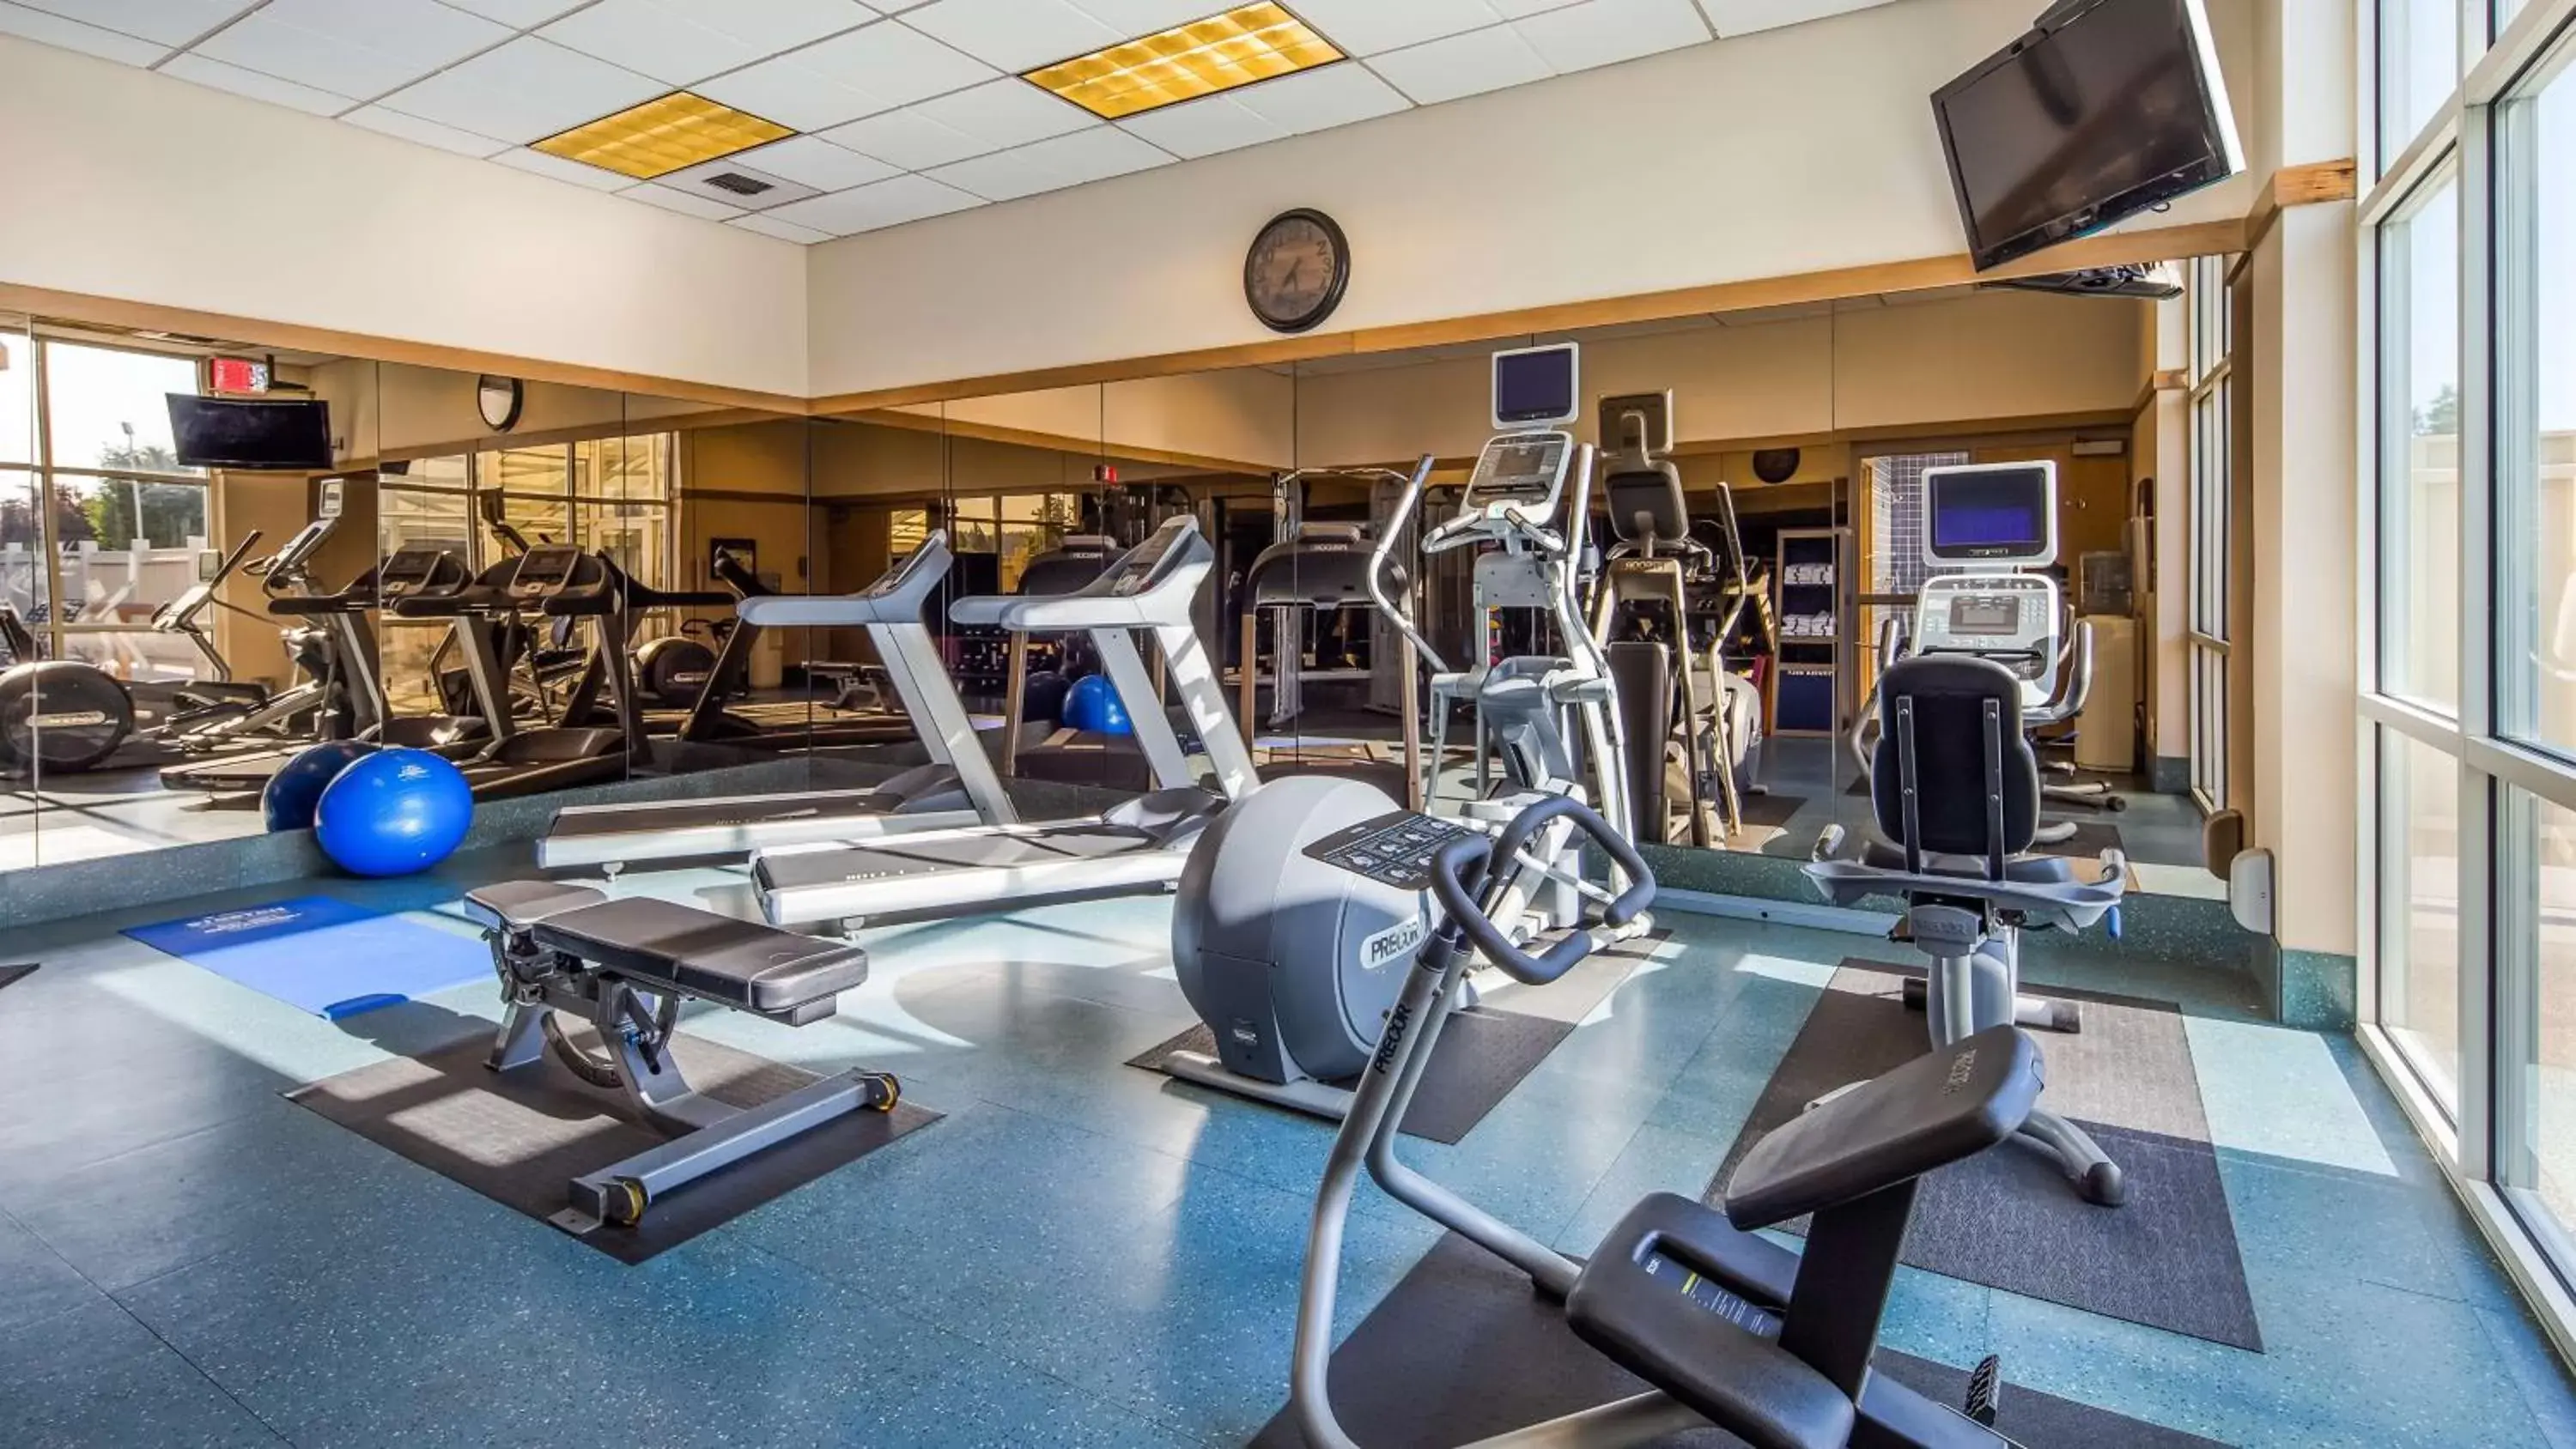 Fitness centre/facilities, Fitness Center/Facilities in Best Western Plus Coeur d'Alene Inn